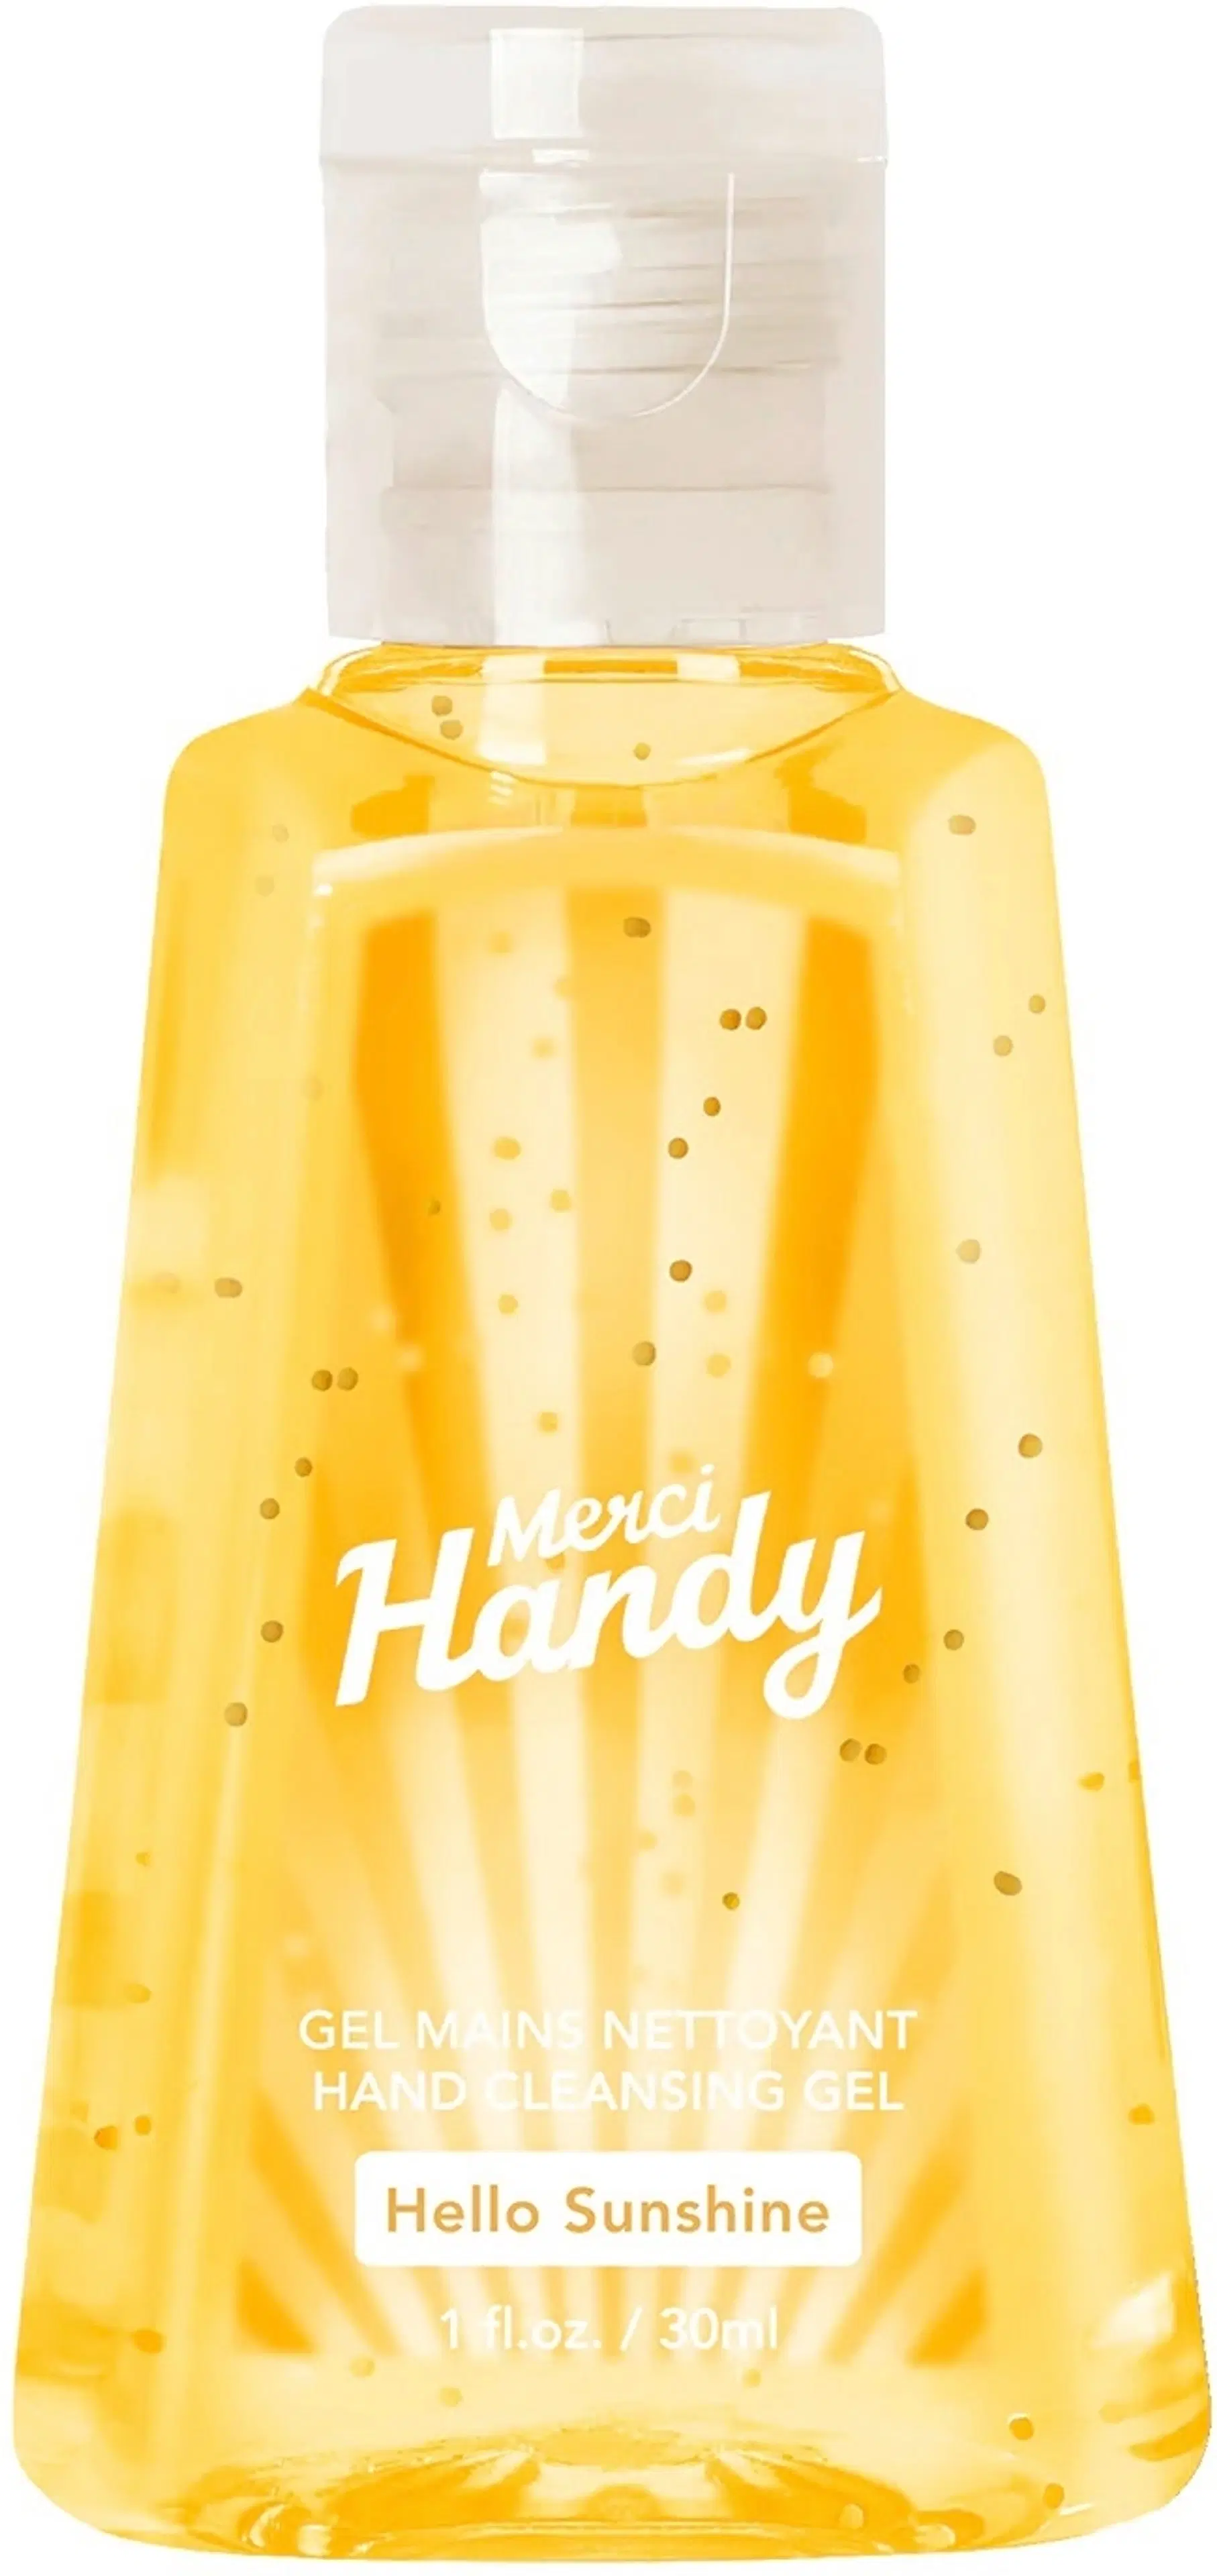 Merci Handy  hand cleansing gel Hello Sunshine käsidesi 30 ml